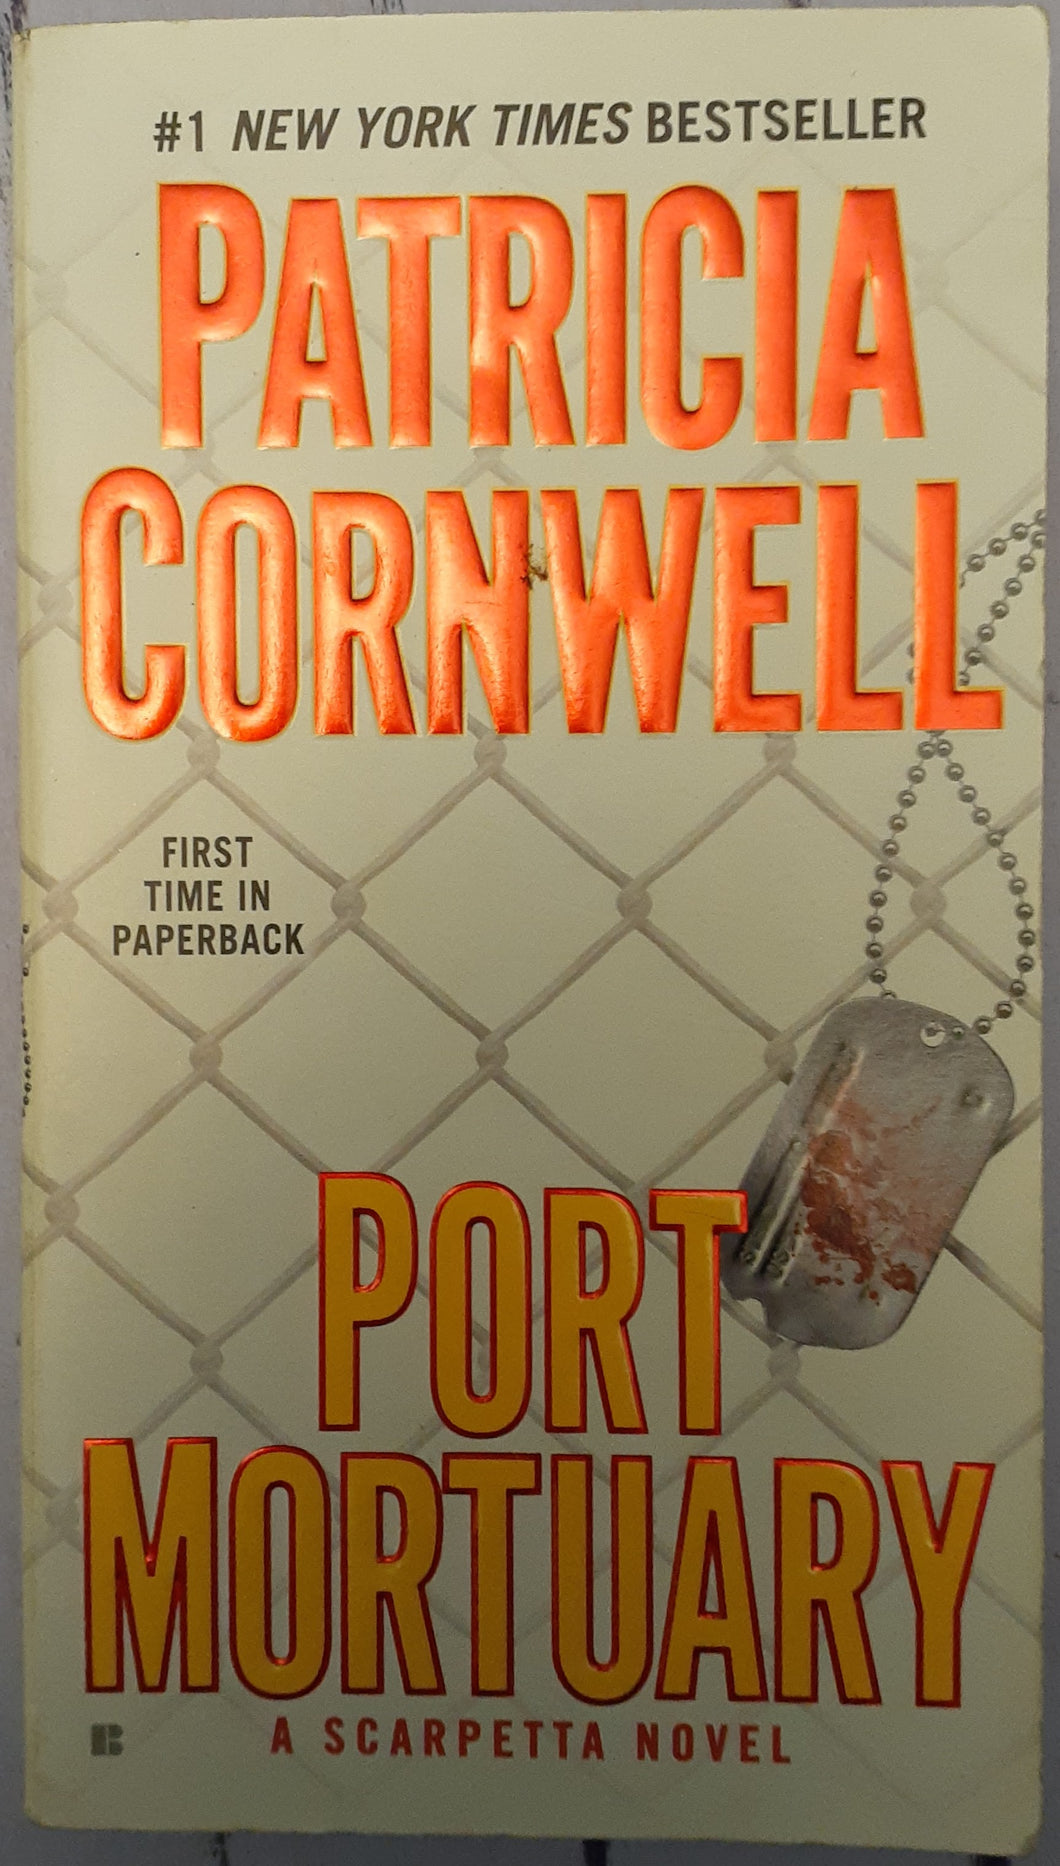 Port Mortuary - A Scarpetta Novel